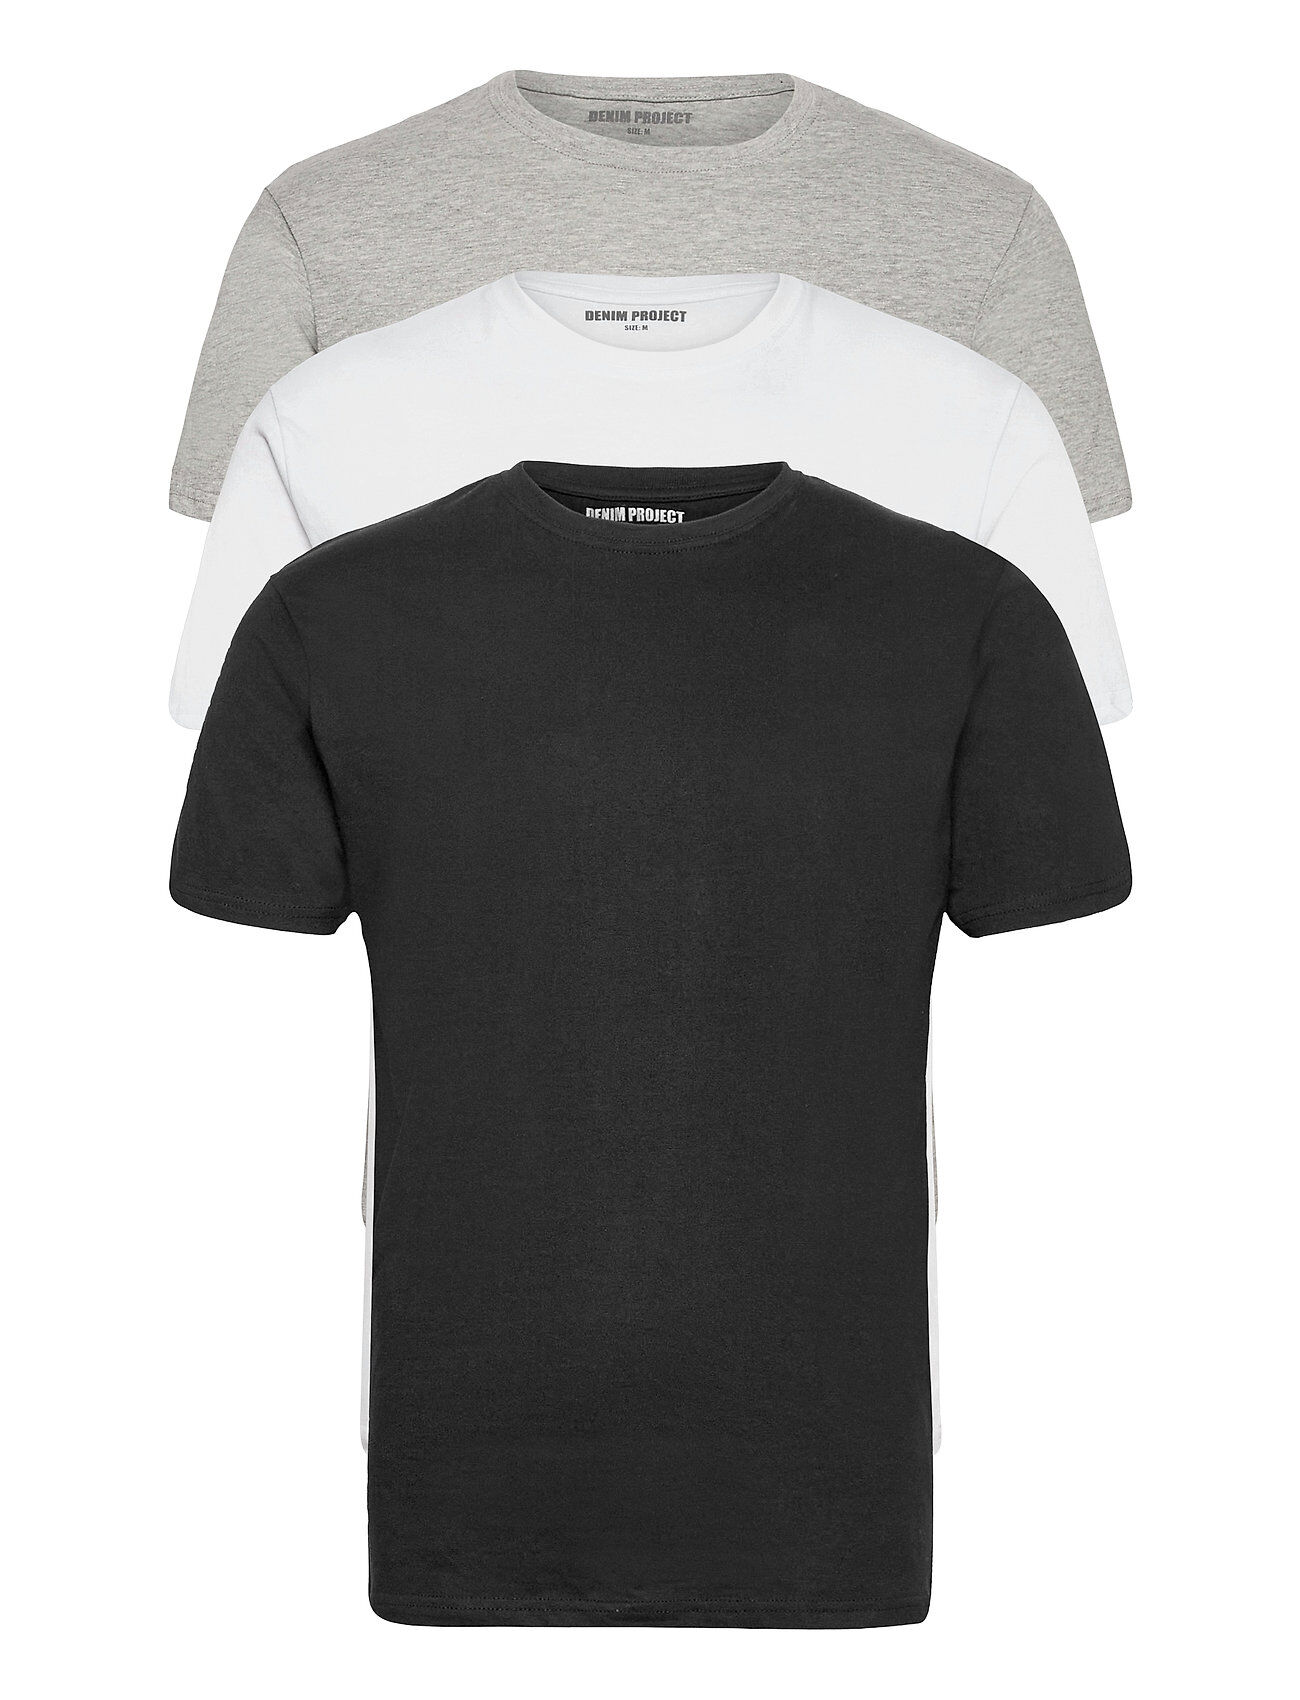 Pro-Ject 3 Pack T-Shirts T-shirts Short-sleeved Svart Denim Project